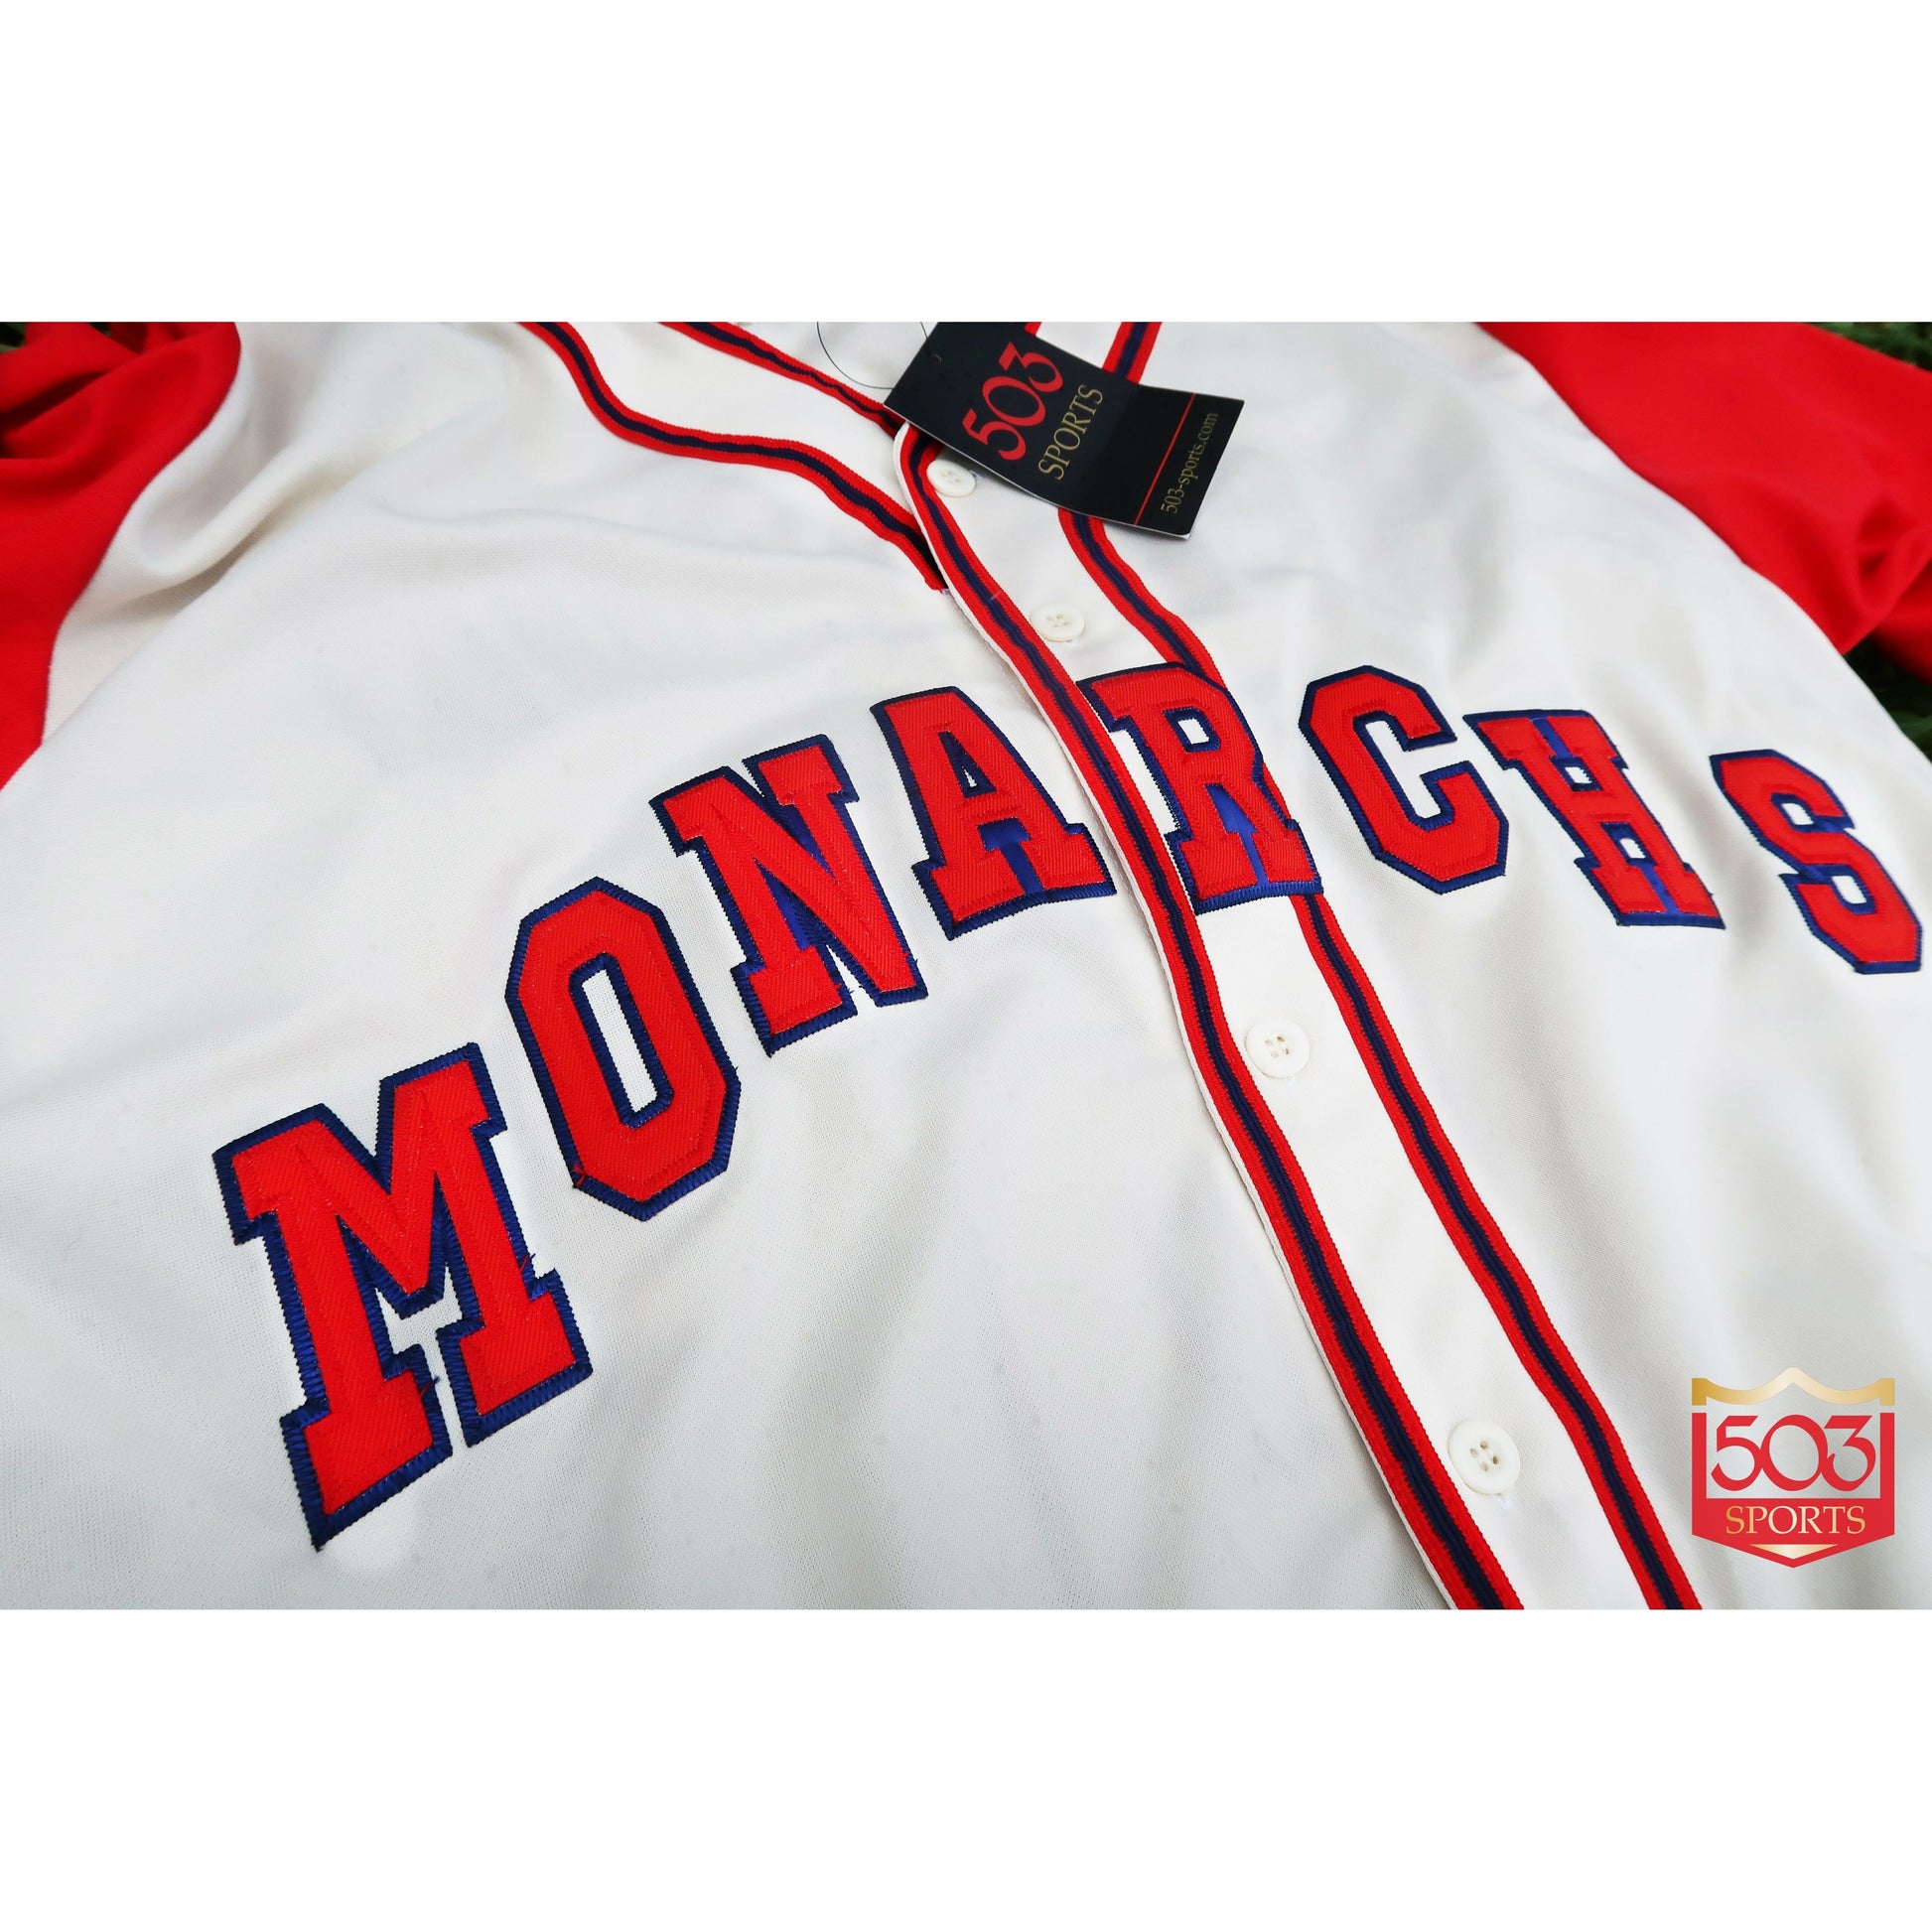 Authentic Kansas City Monarch Baseball Jersey 2x / White/Navy Pinstripe